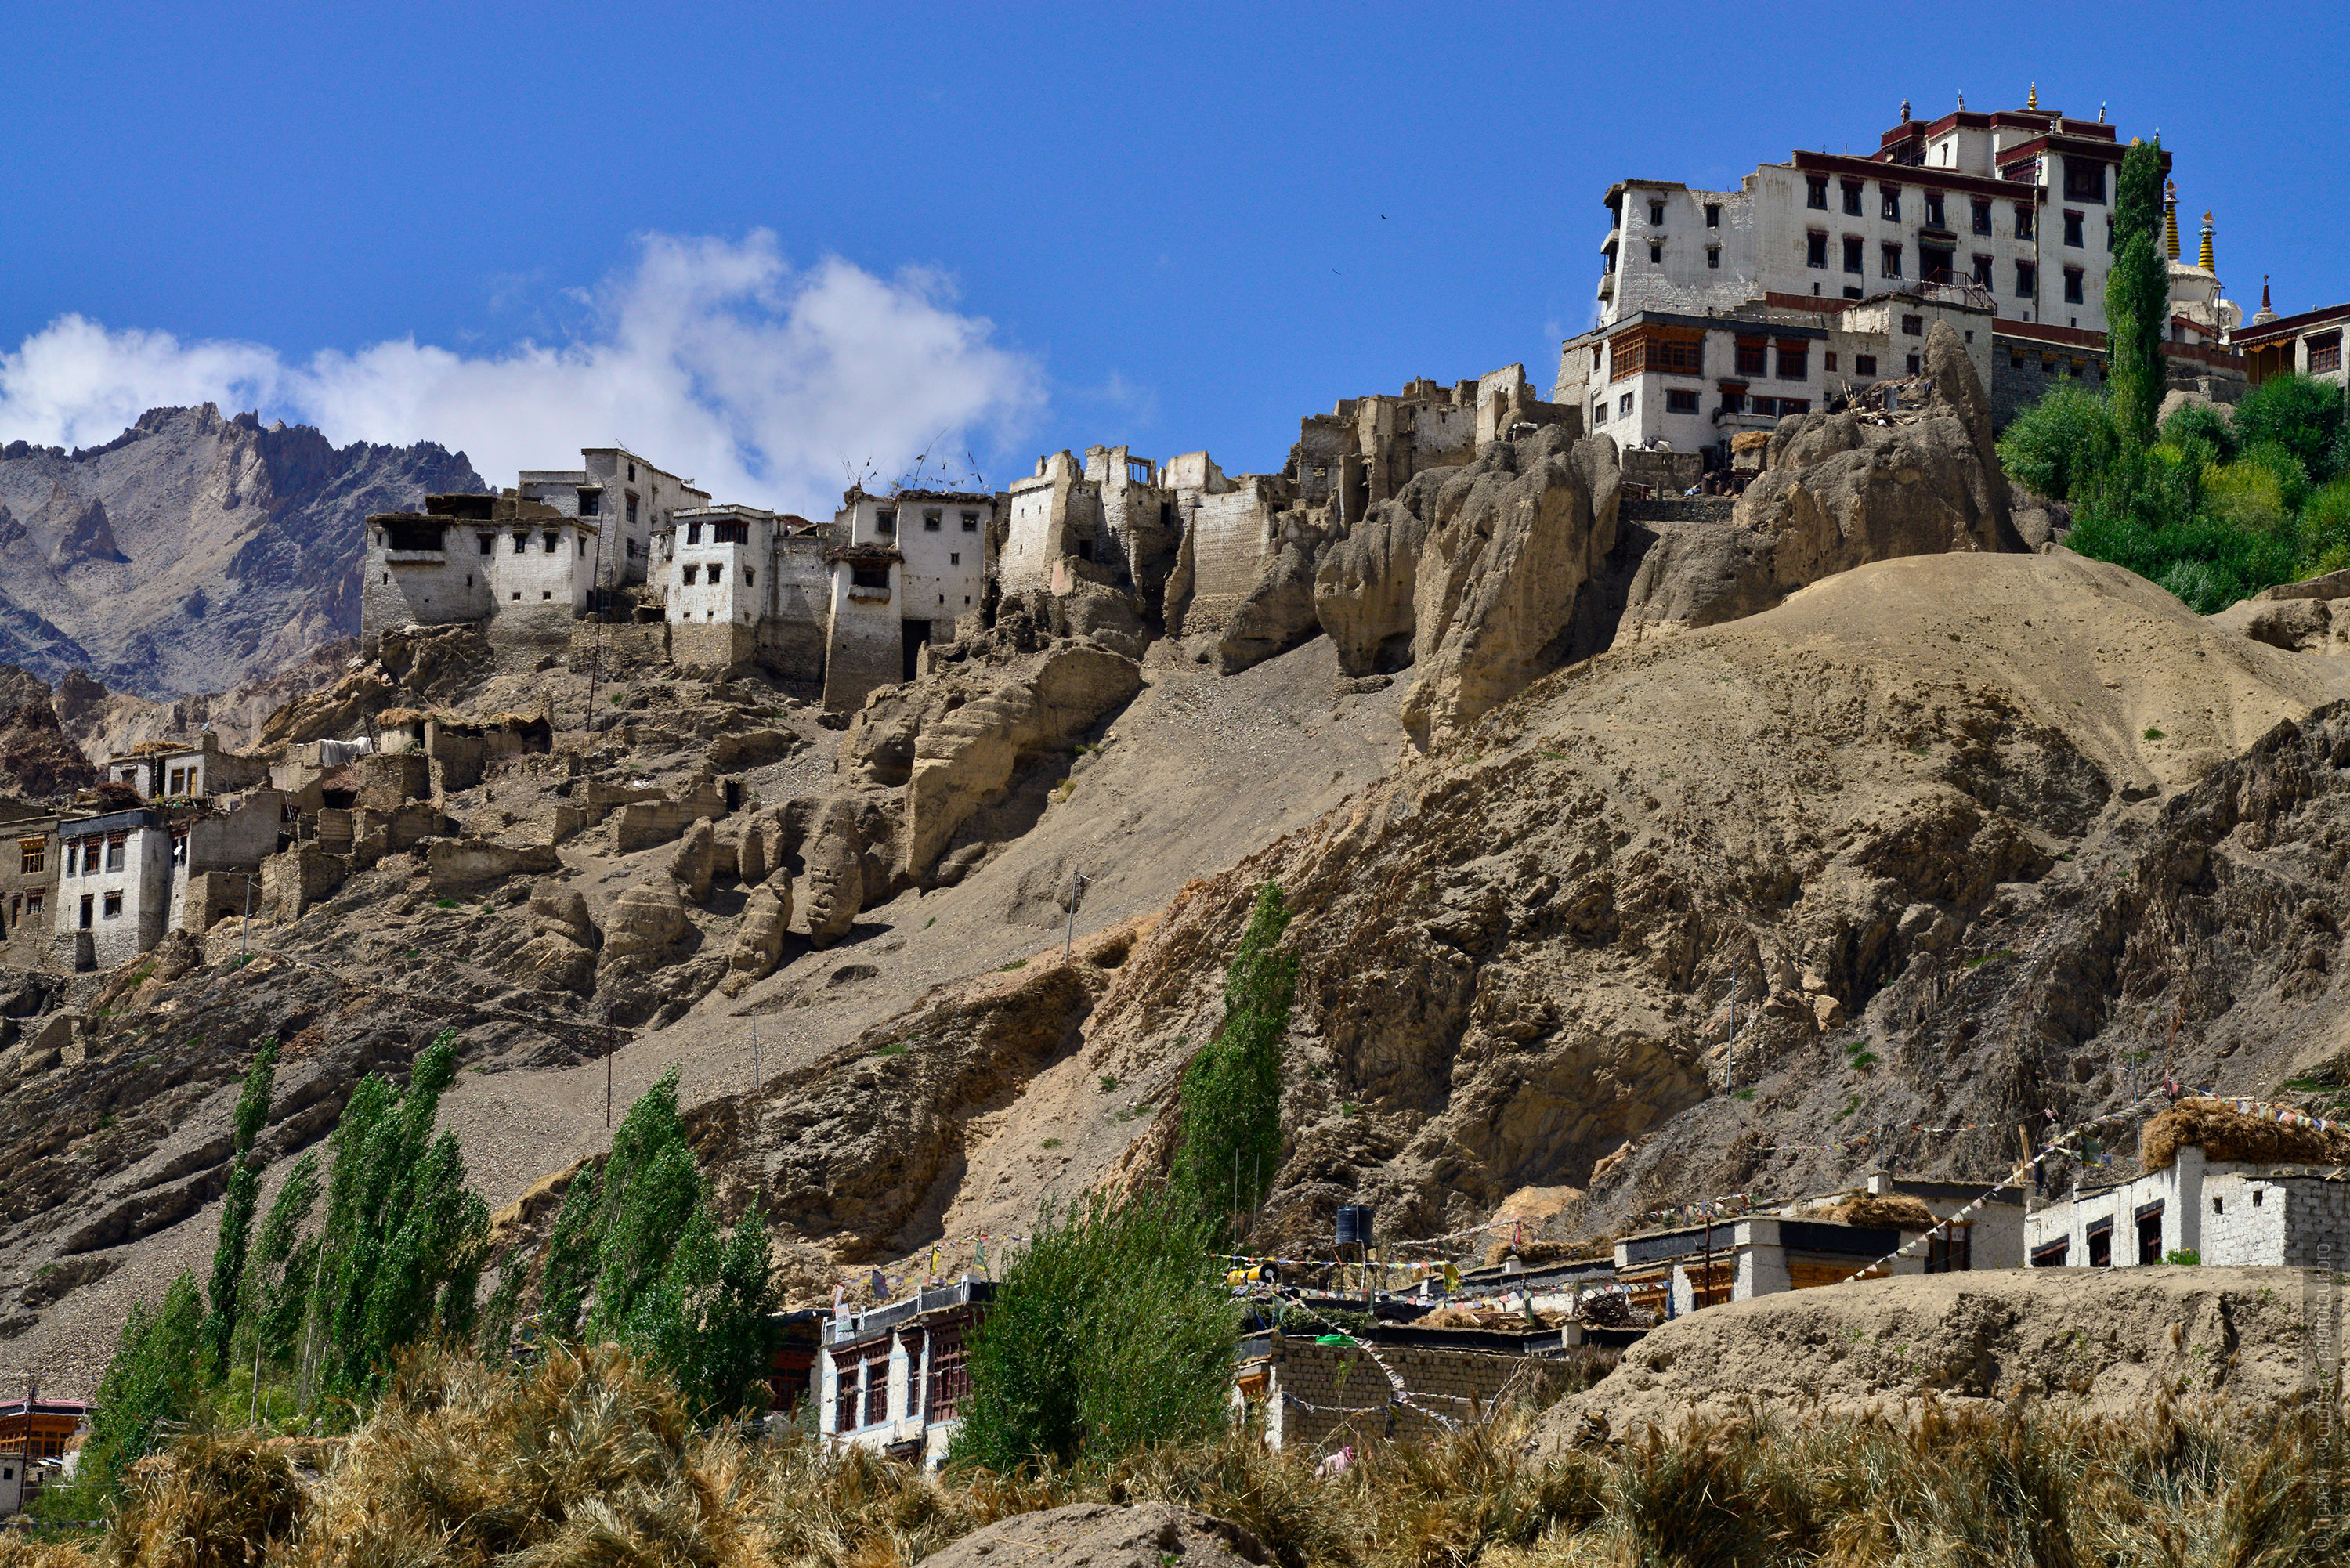 Боновский монастырь ламаюру и деревня Ламаюру, Ладакх. Тур по Ладакху с Проектом ФотоТур.